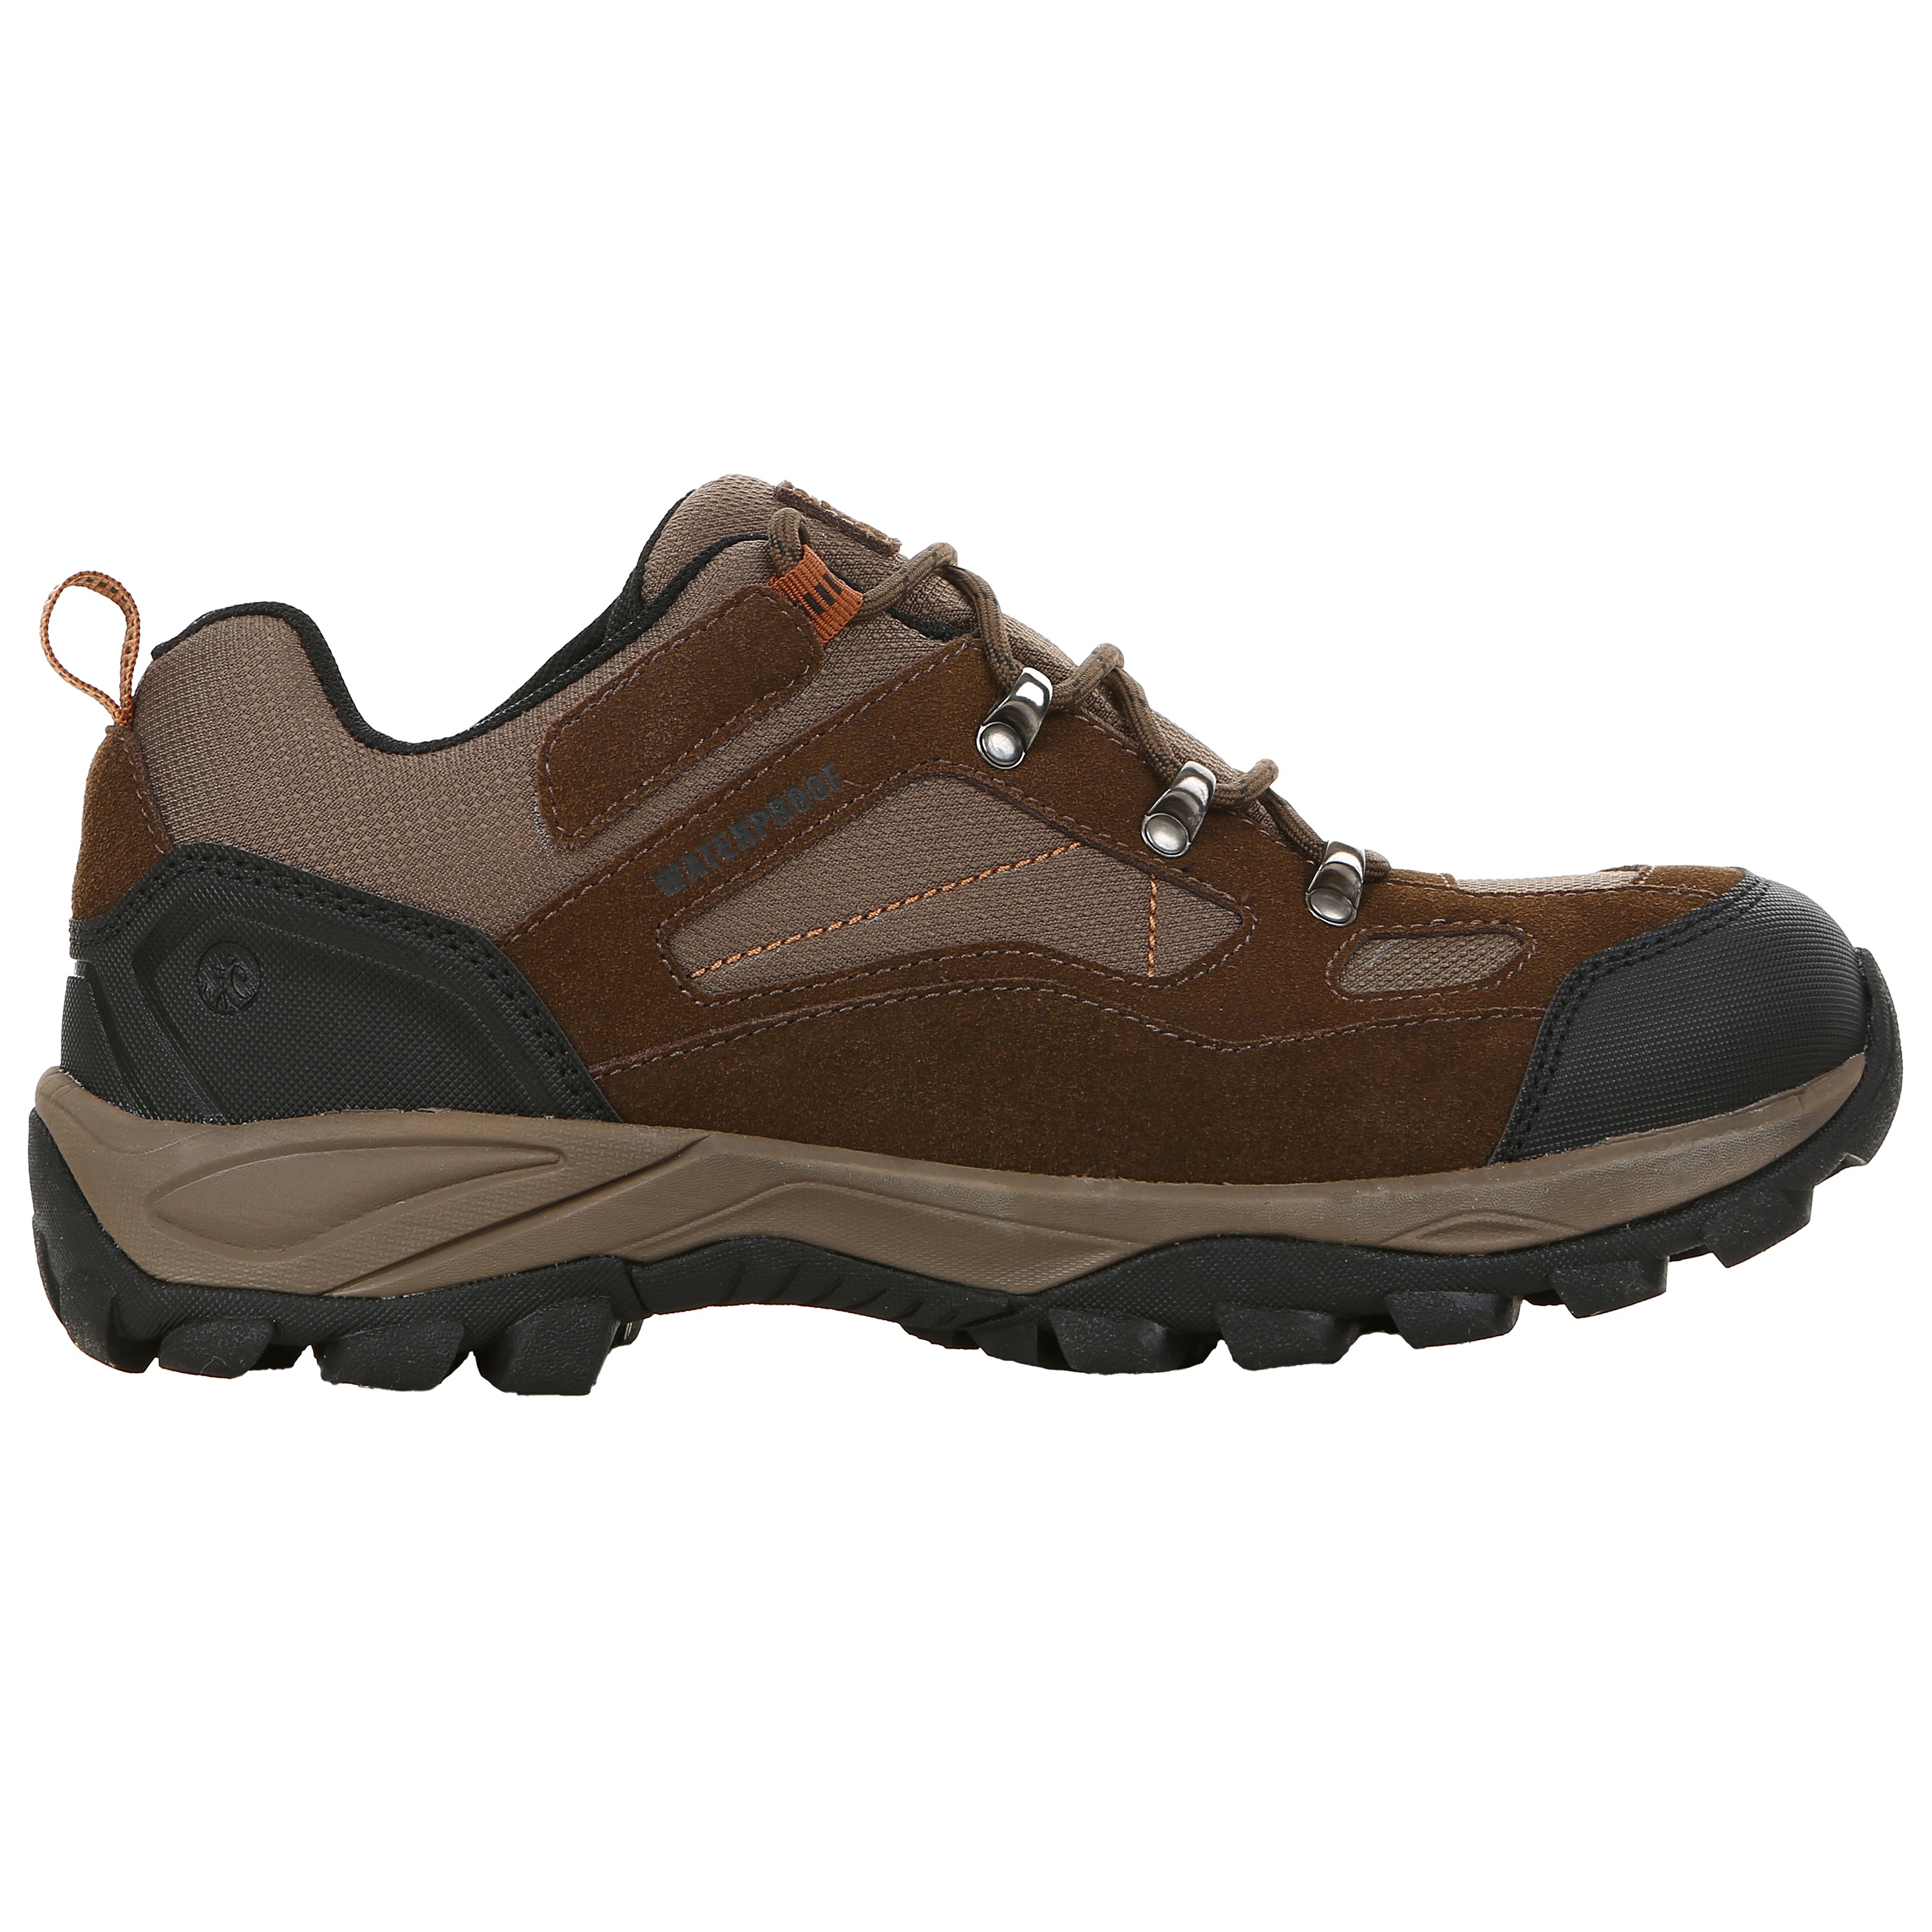 Men's Ranger Waterproof Hiking Shoe